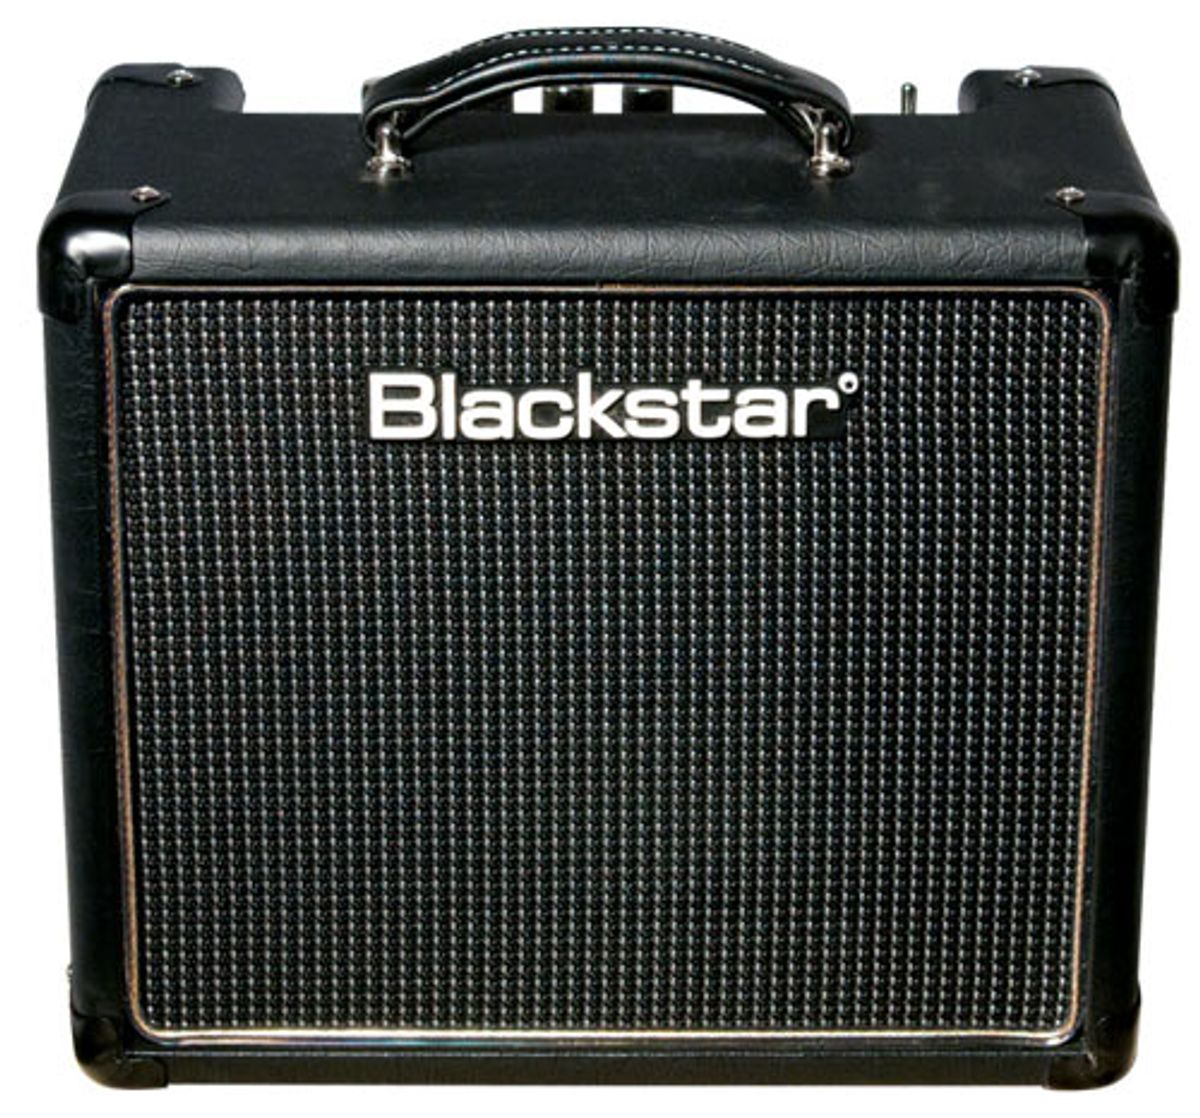 Blackstar HT-1R Amp Review